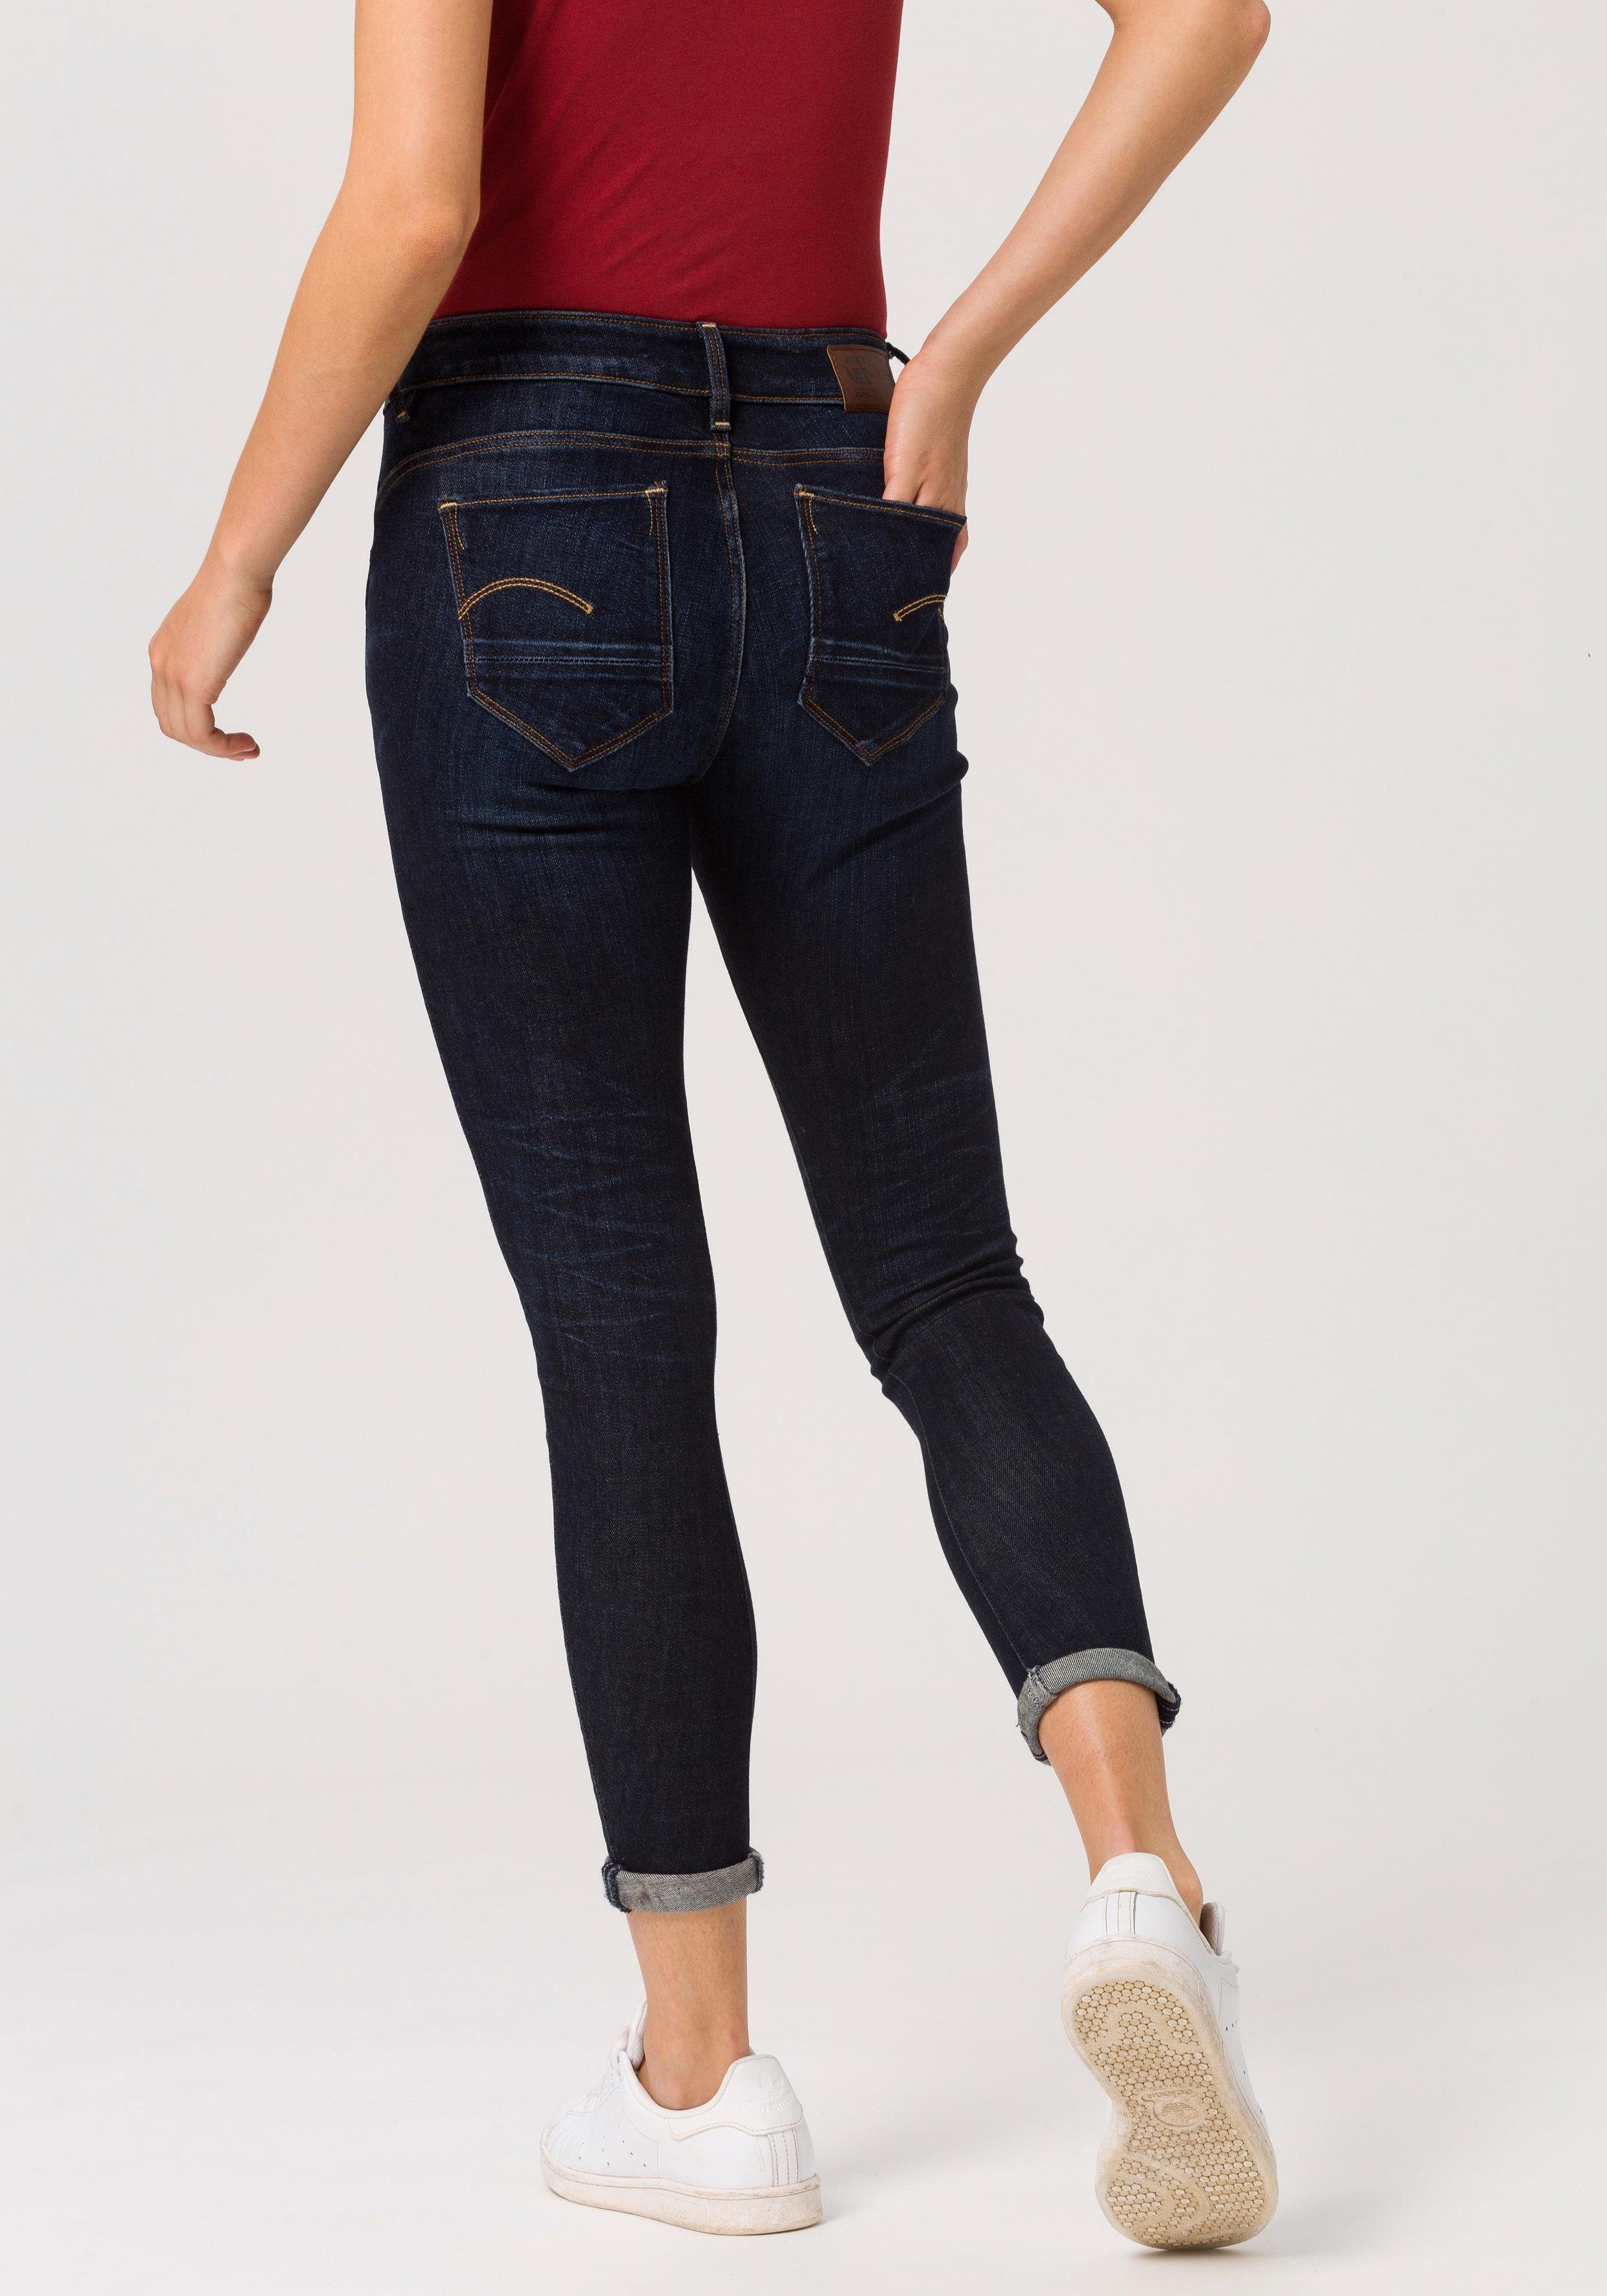 arc 3d mid waist skinny jeans